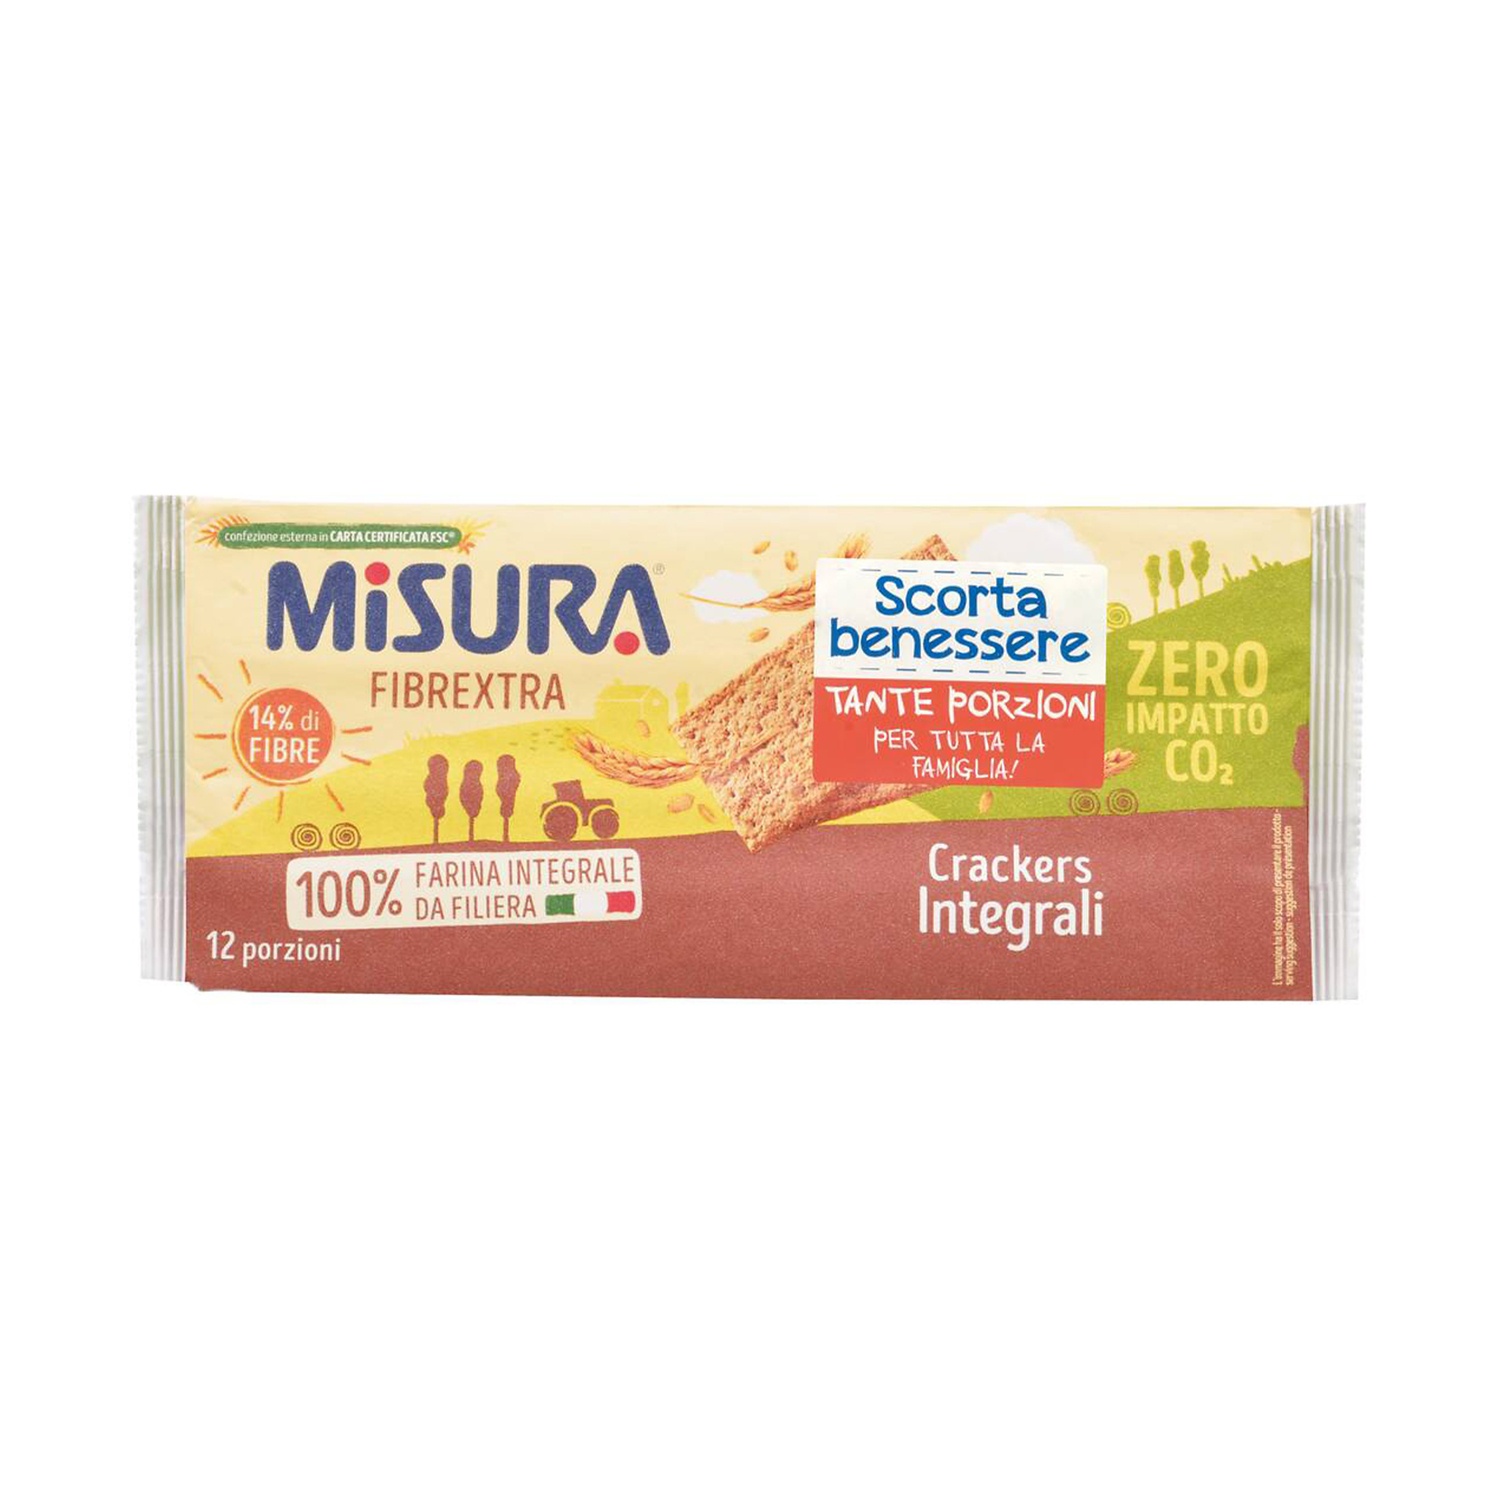 MISURA Cracker fibrextra